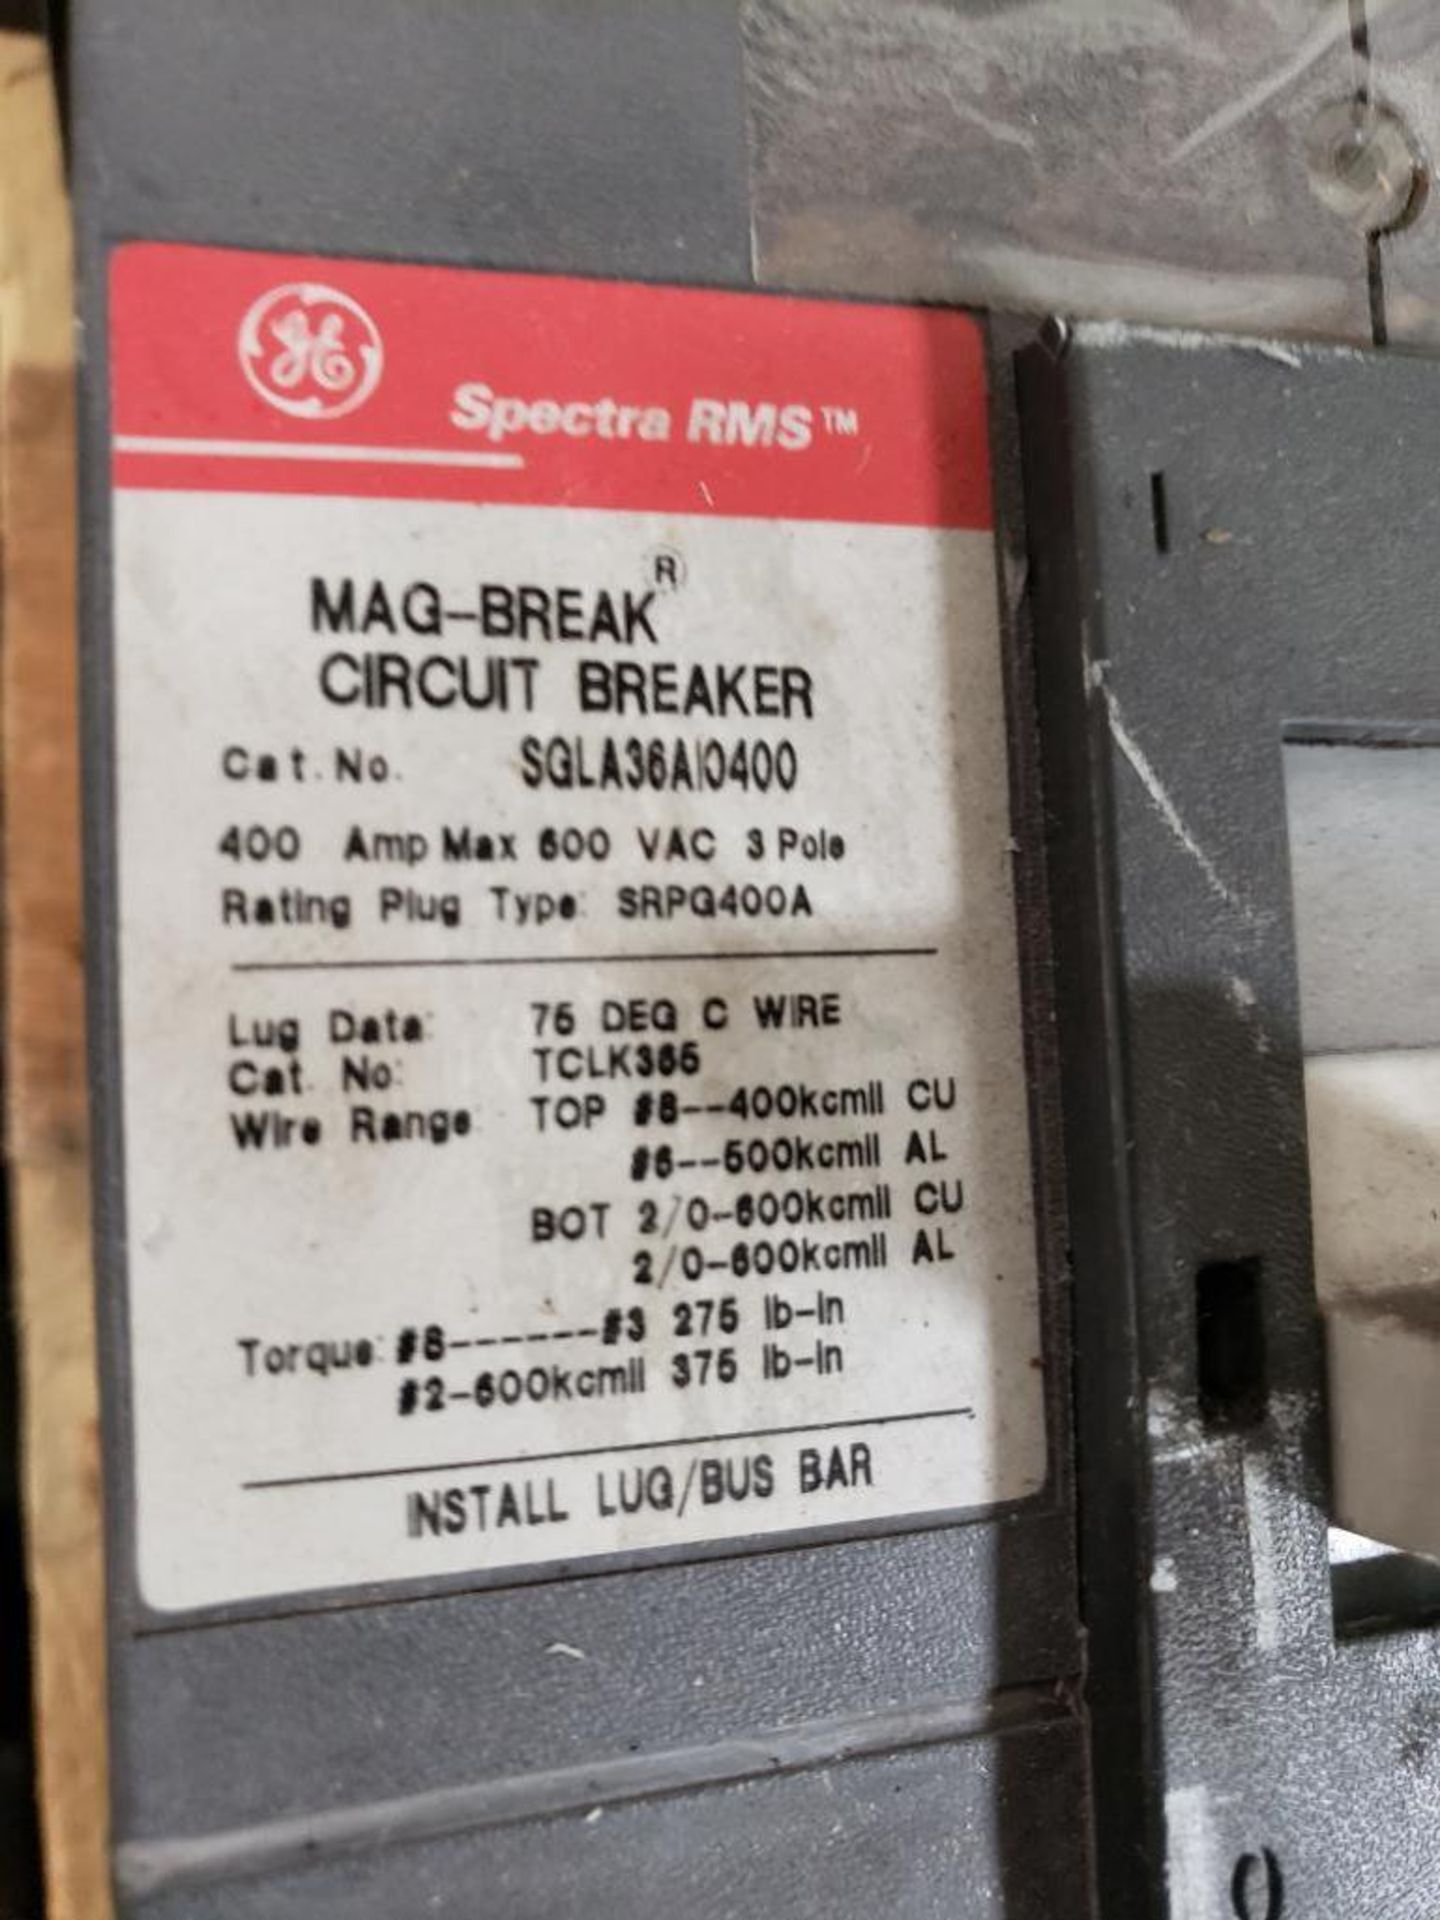 GE Spectra RMS Mag-Break Circuit breaker catalog SGLA36A10400. - Image 2 of 2